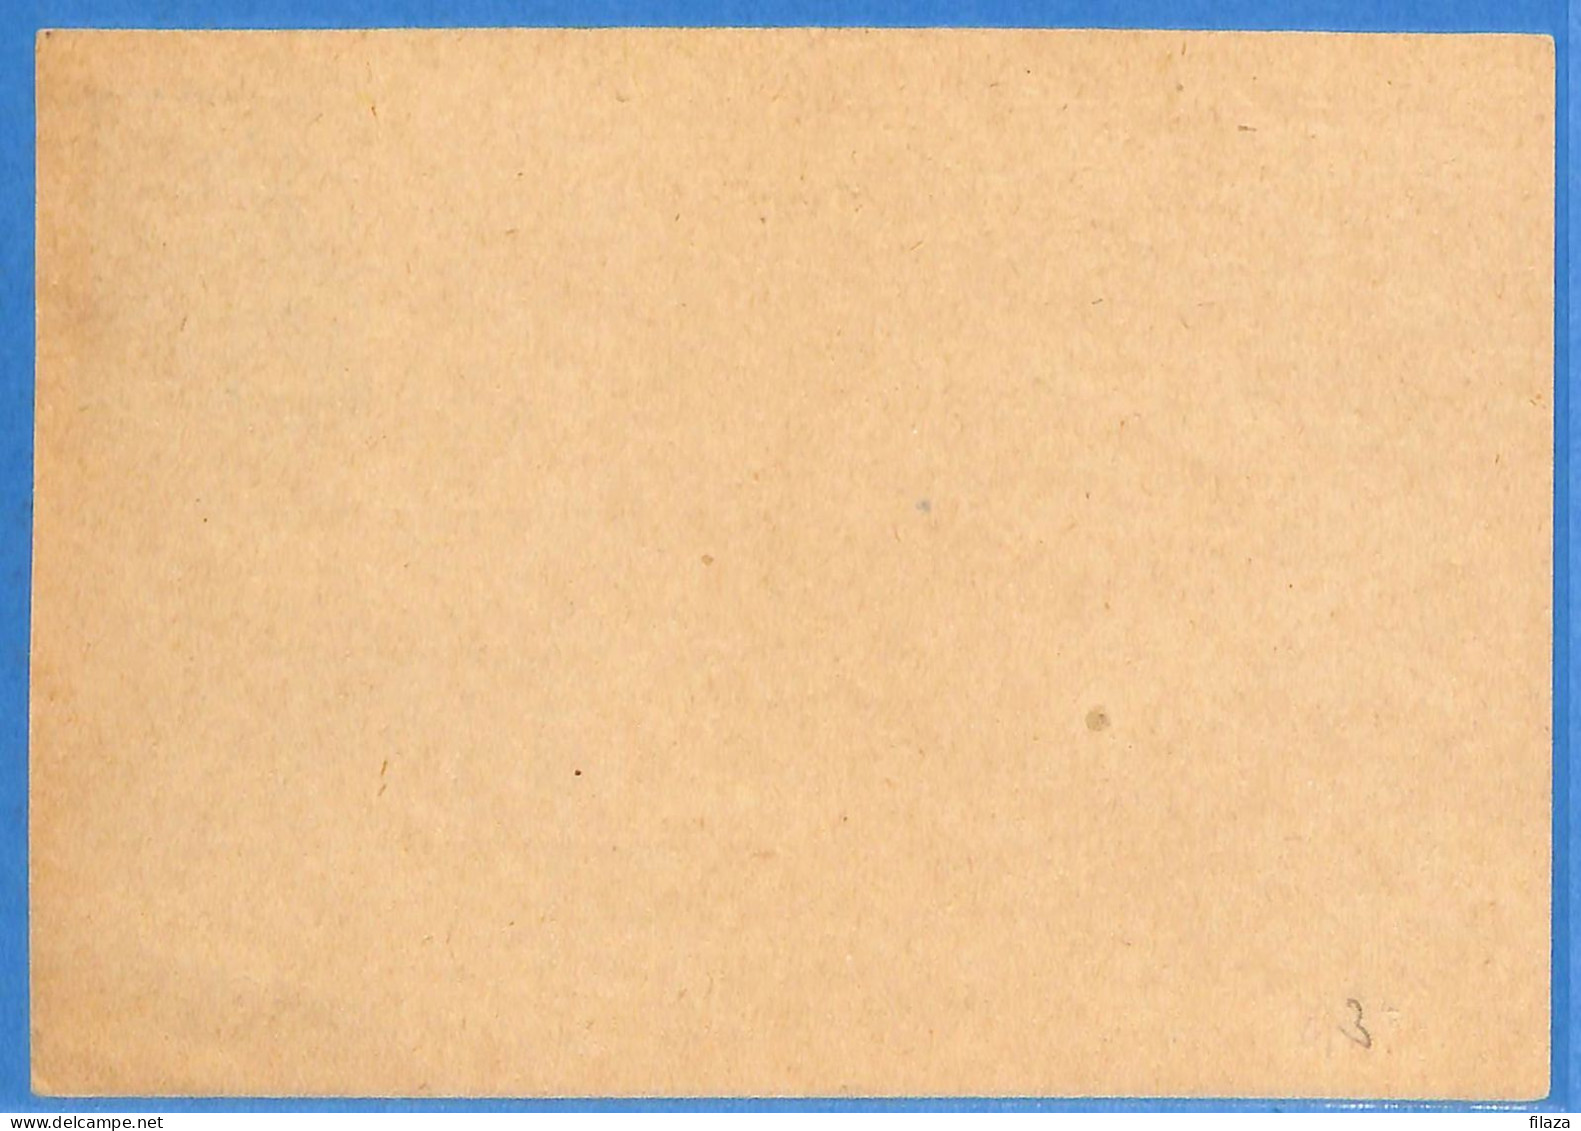 Allemagne Reich 1944 - Carte Postale De Konigsberg - G33171 - Storia Postale